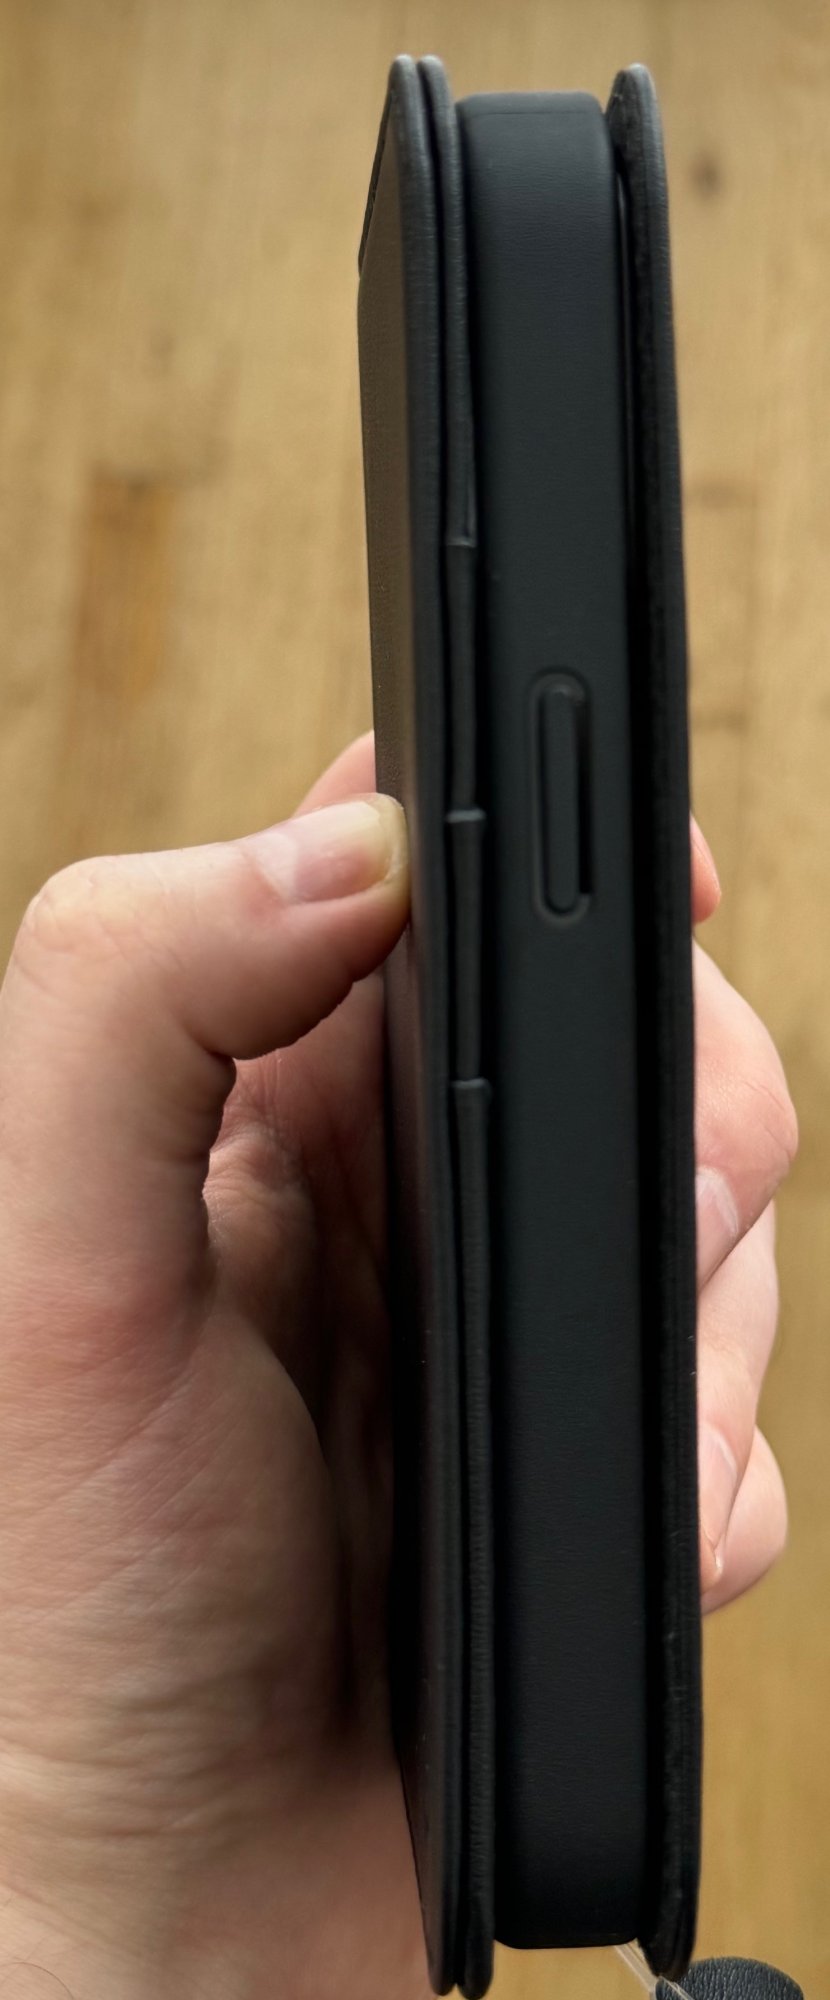 2 in 1 iPhone 15 Pro Max Leather Case - Vaja